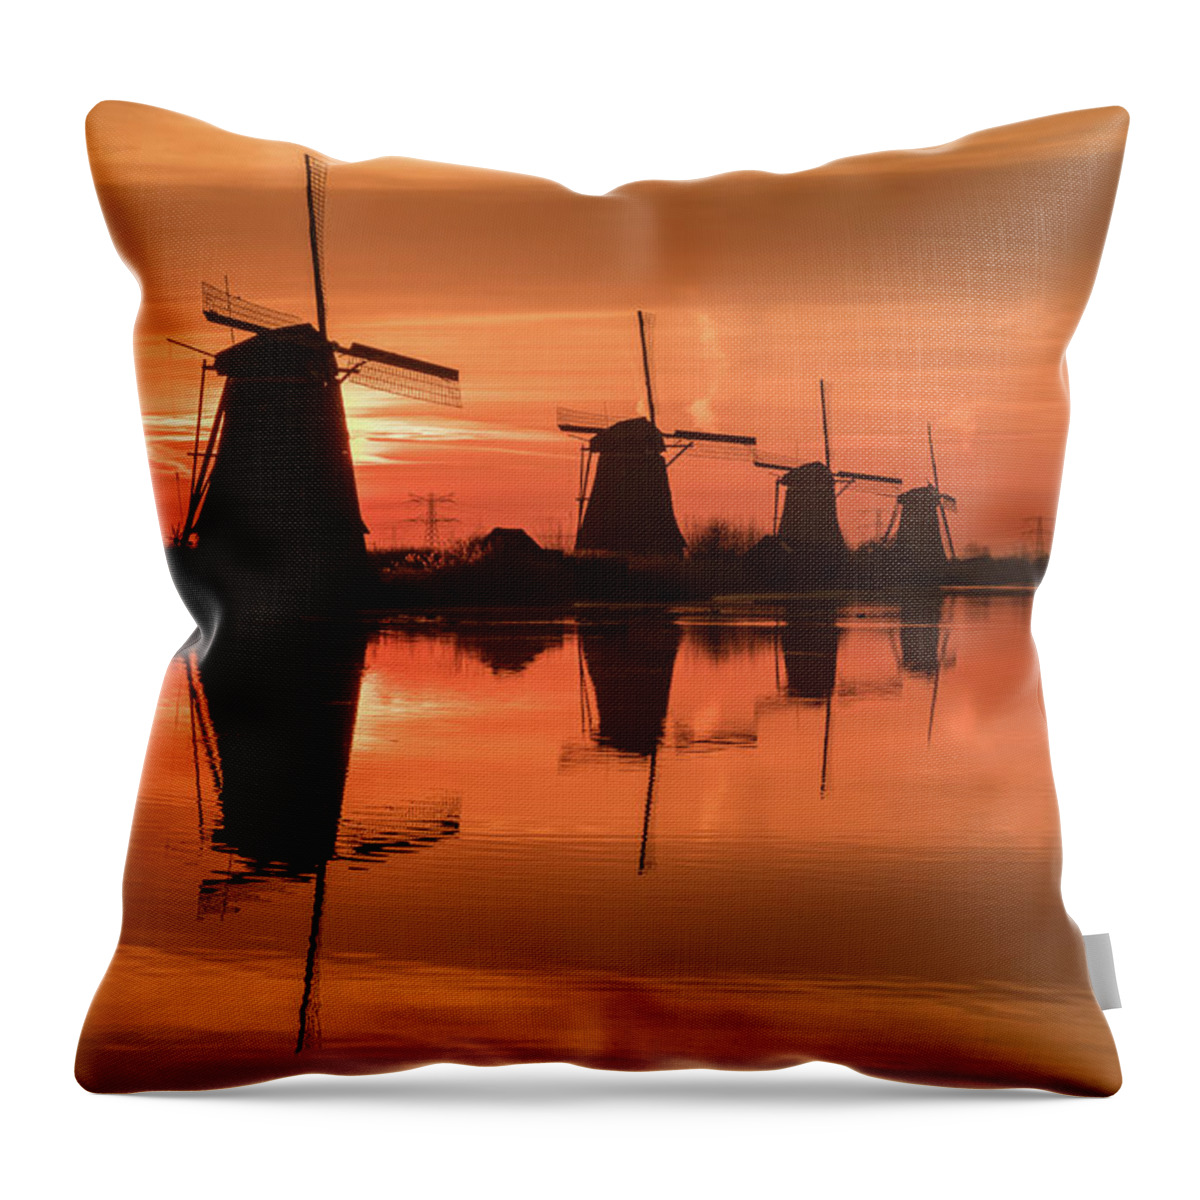 Dutch Throw Pillow featuring the photograph Dutch sillhouette by Mario Visser